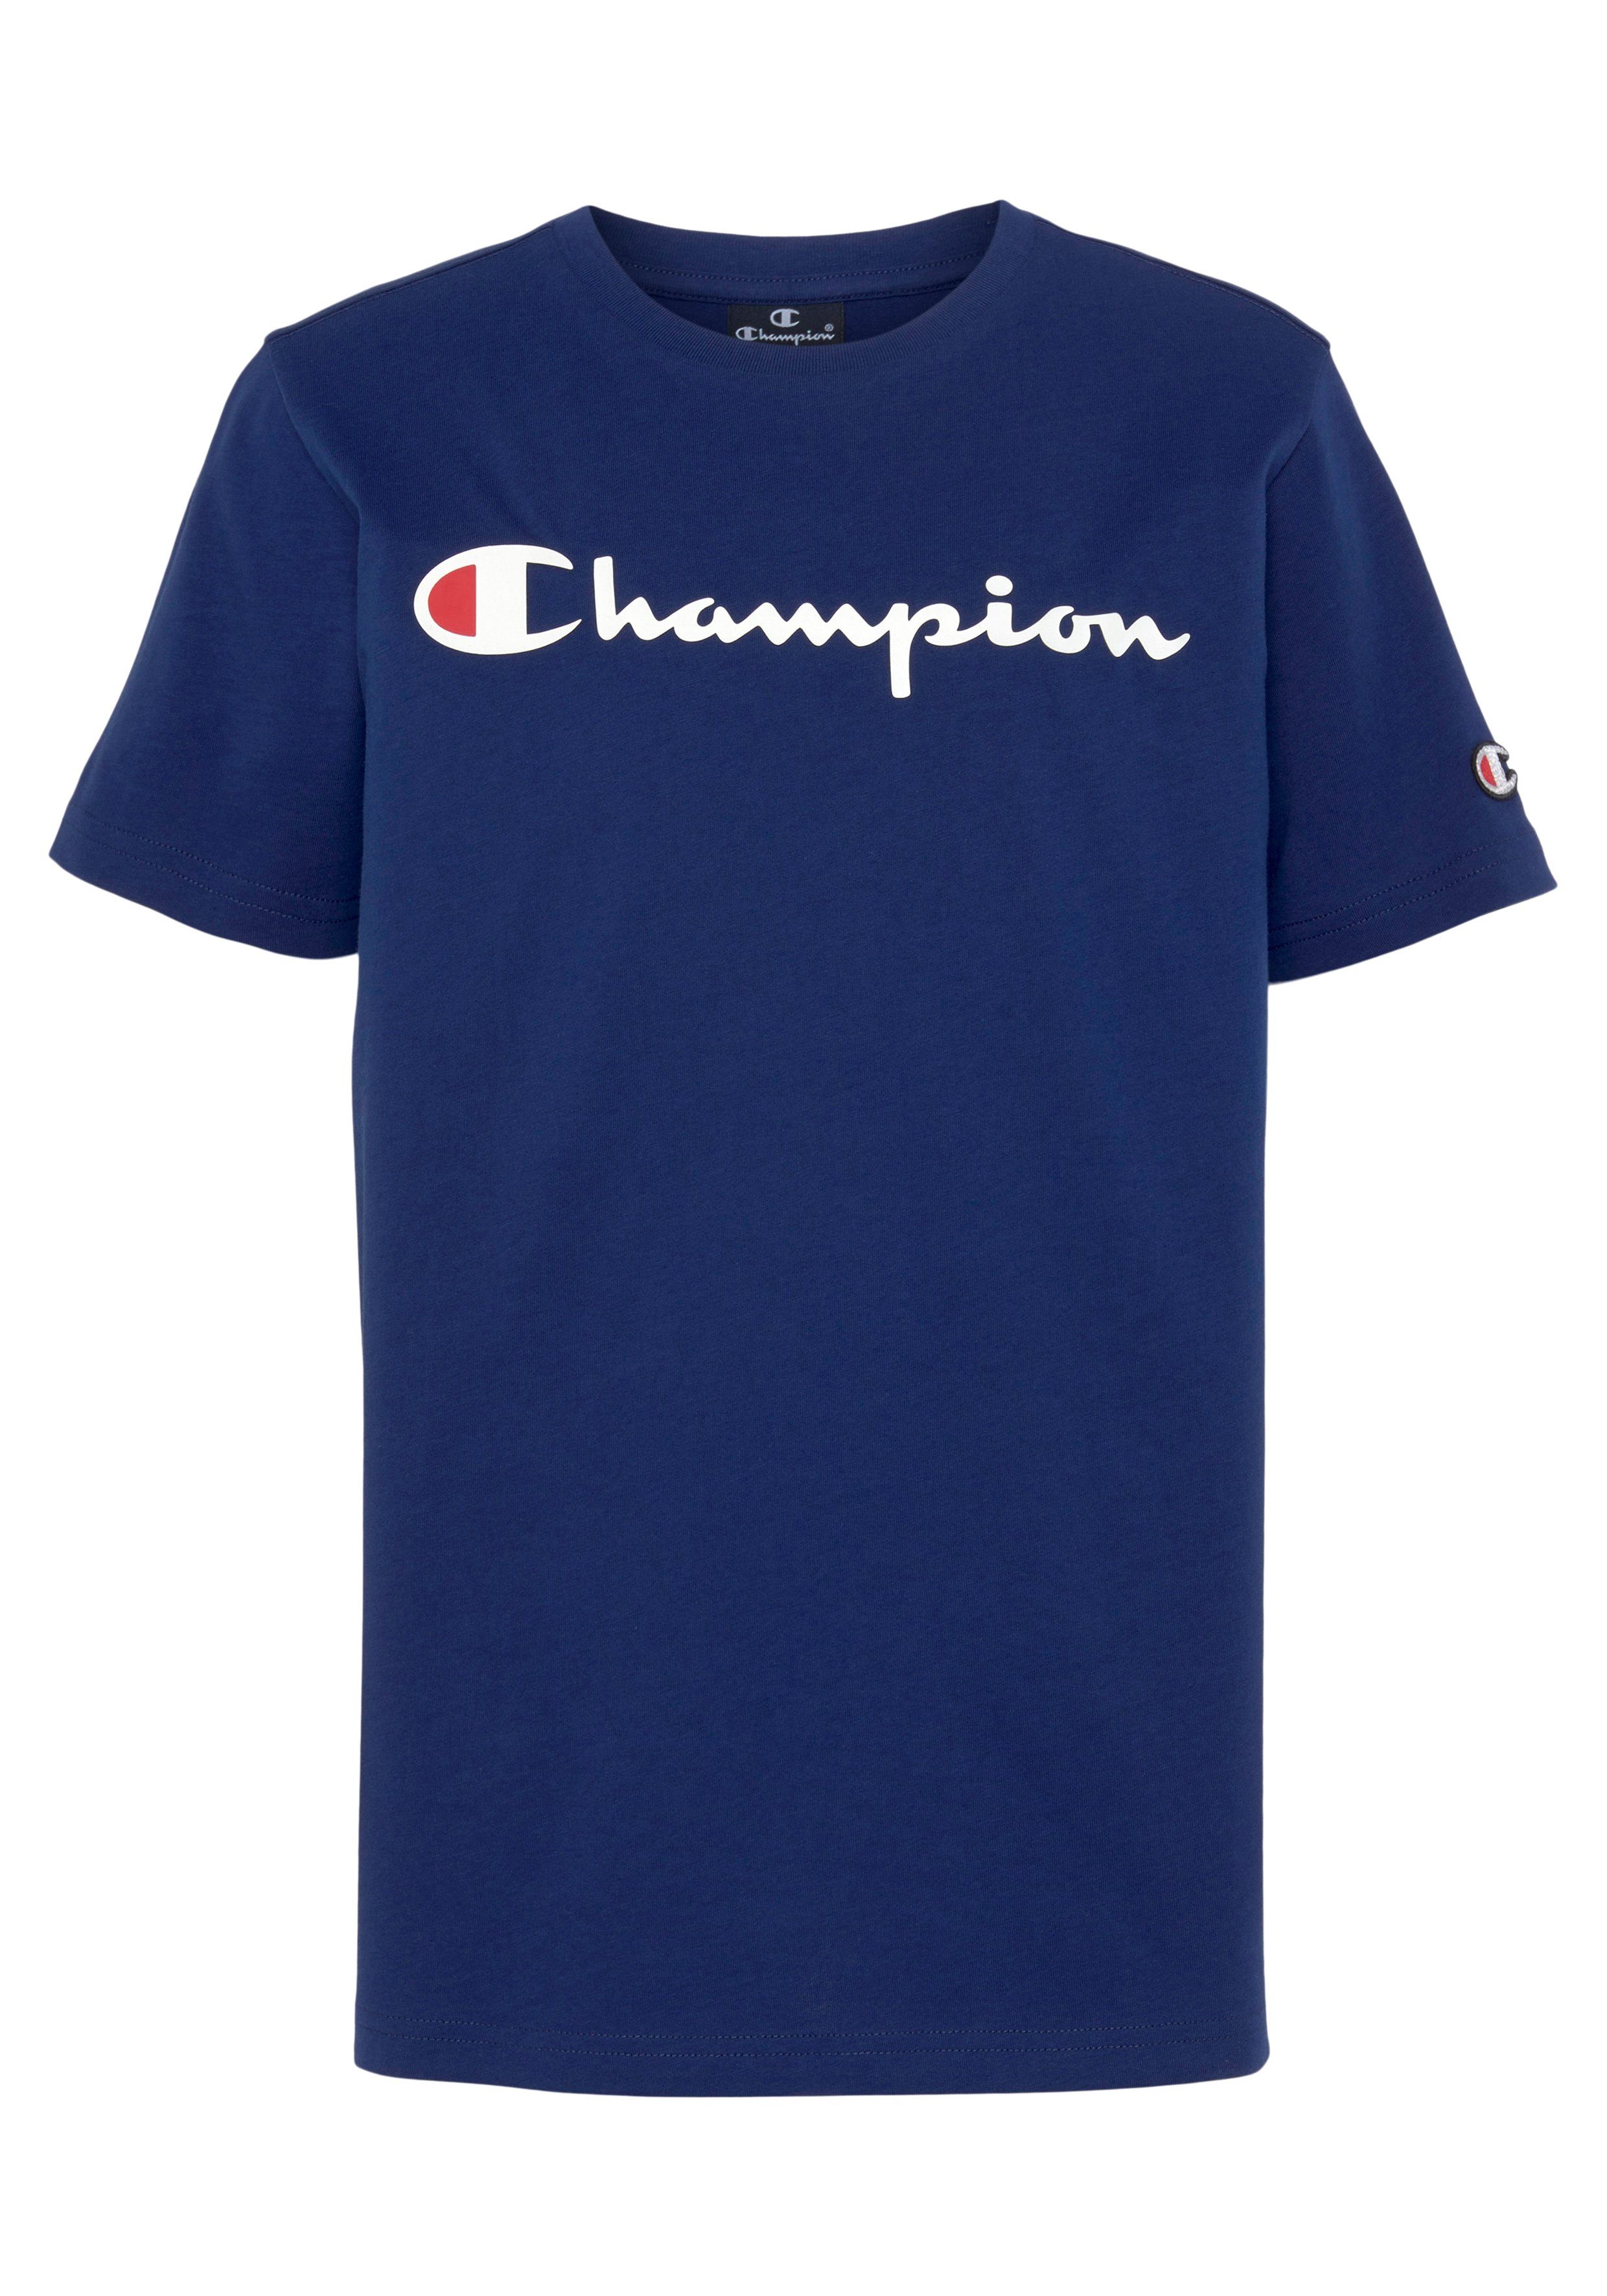 Letzte Preissenkung Champion T-Shirt blau Classic Crewneck Kinder large T-Shirt - Logo für